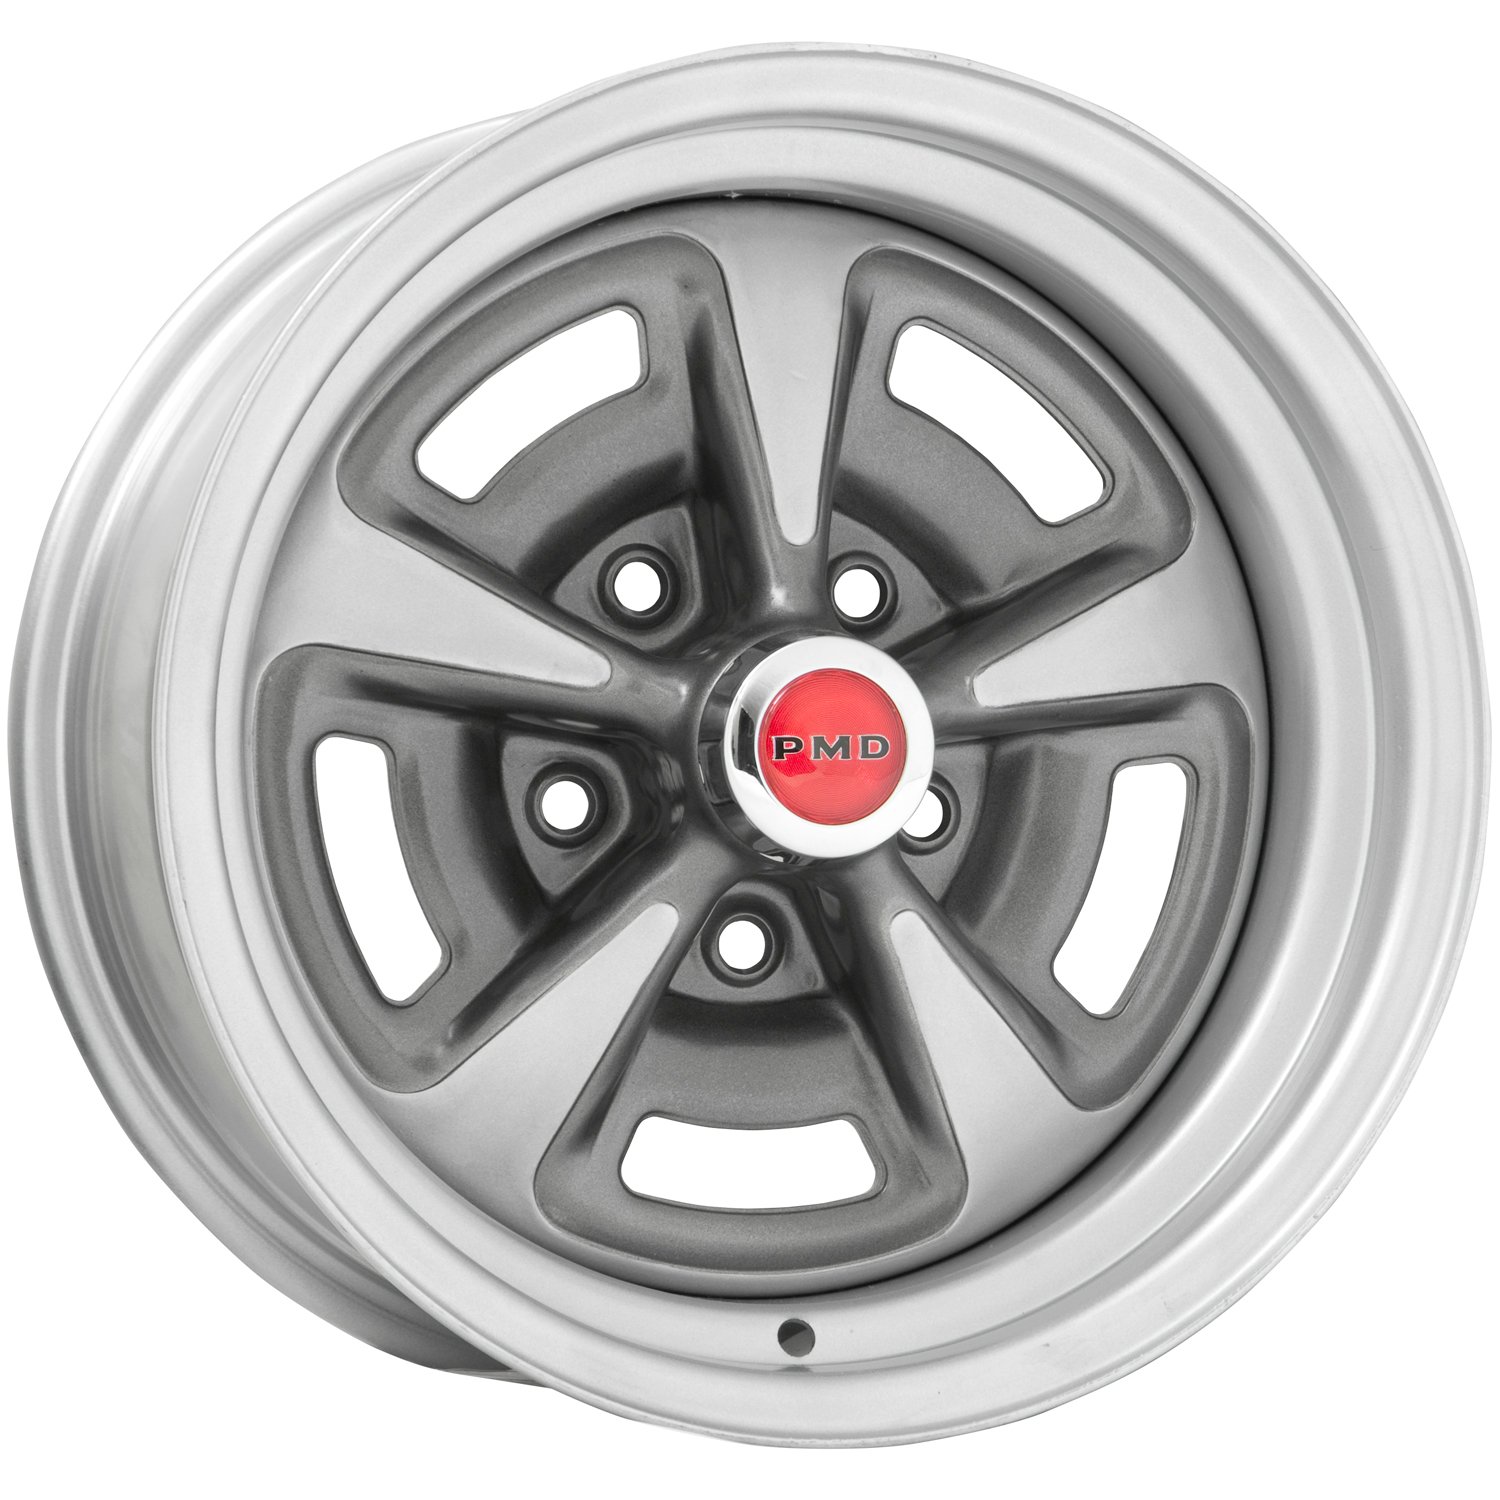 60-573404 60-Series Pontiac Rallye II Wheel [Size: 15" x 7"]